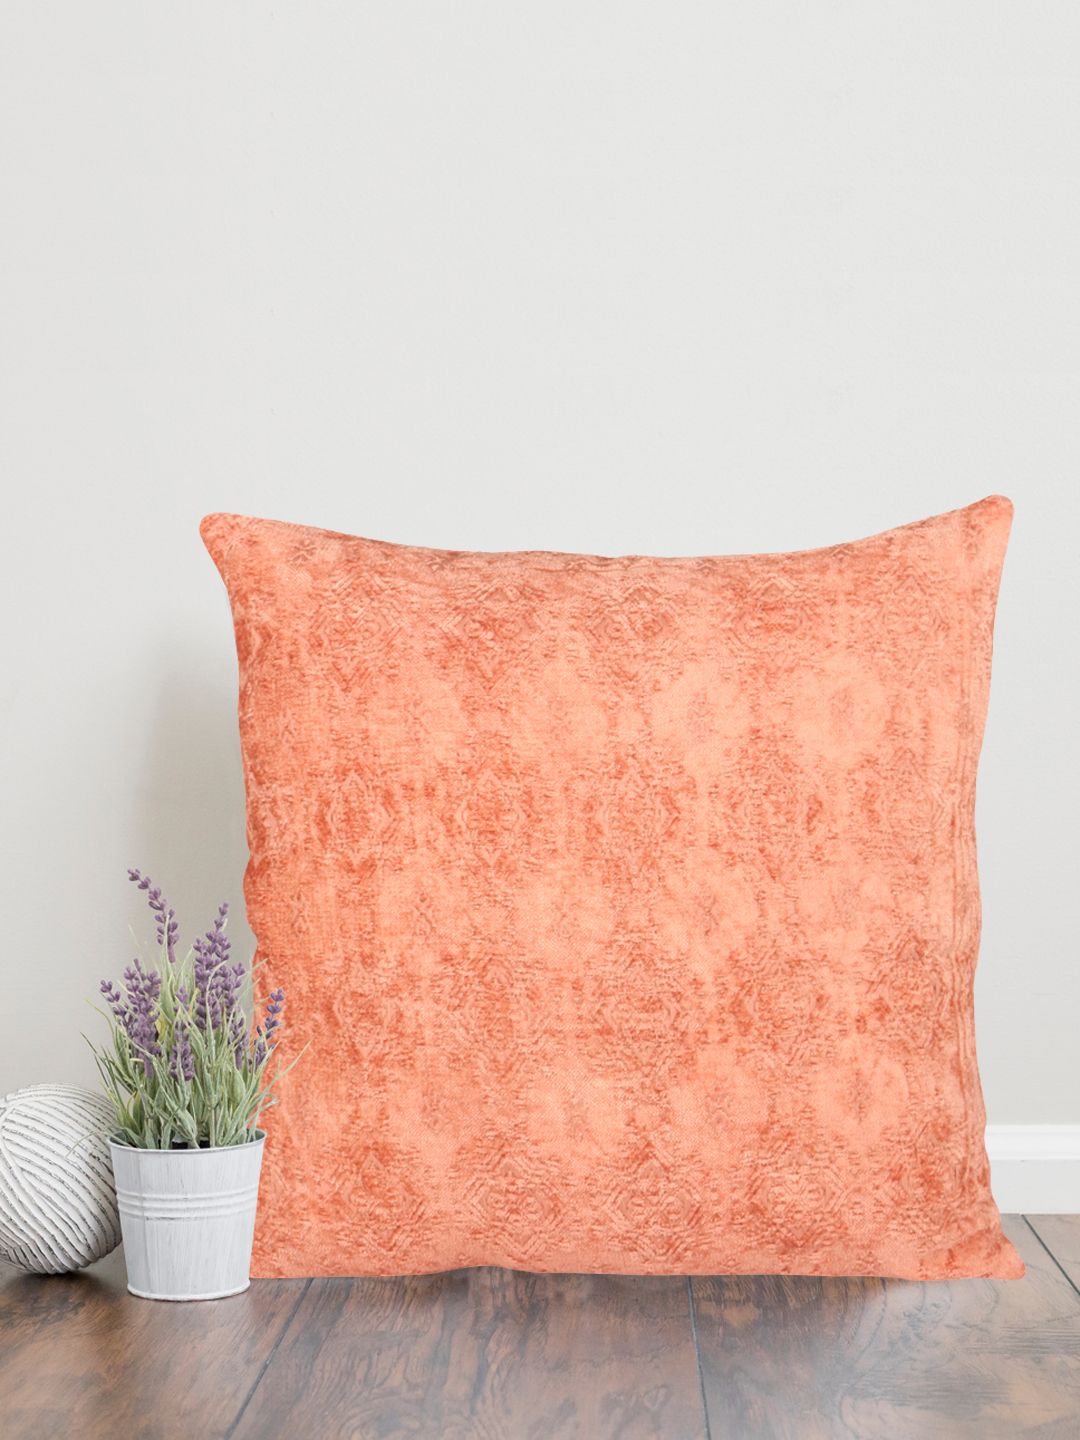 Home Orange Square Cushion Cover Price in India